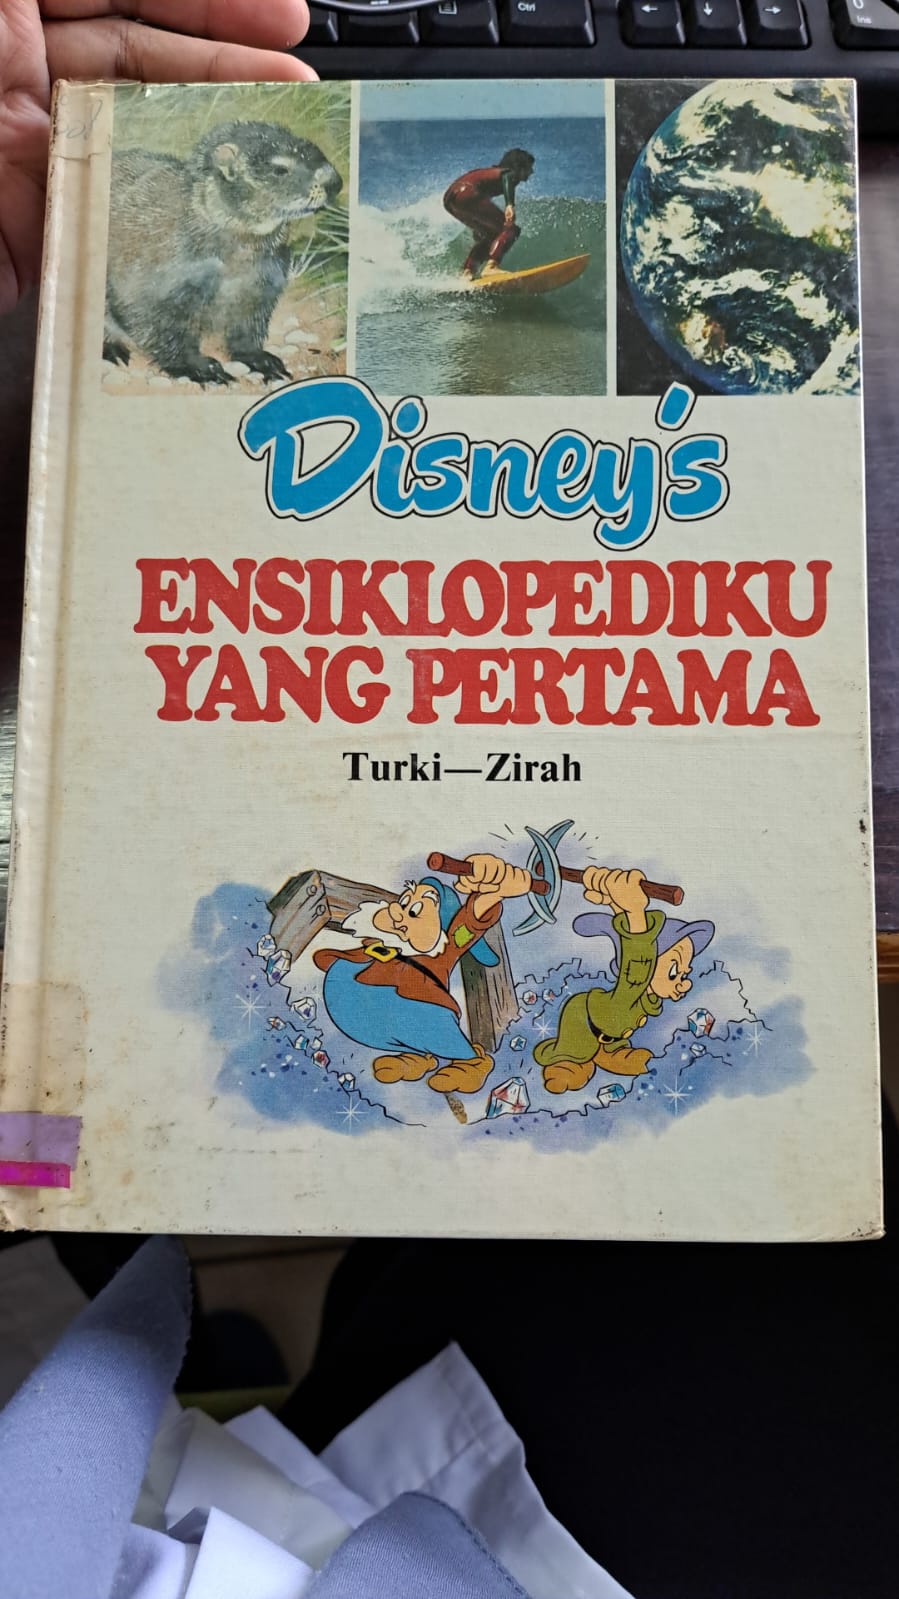 Disney's Jilid 23 :  Ensiklopediku yang pertama 'Turki - zirah'